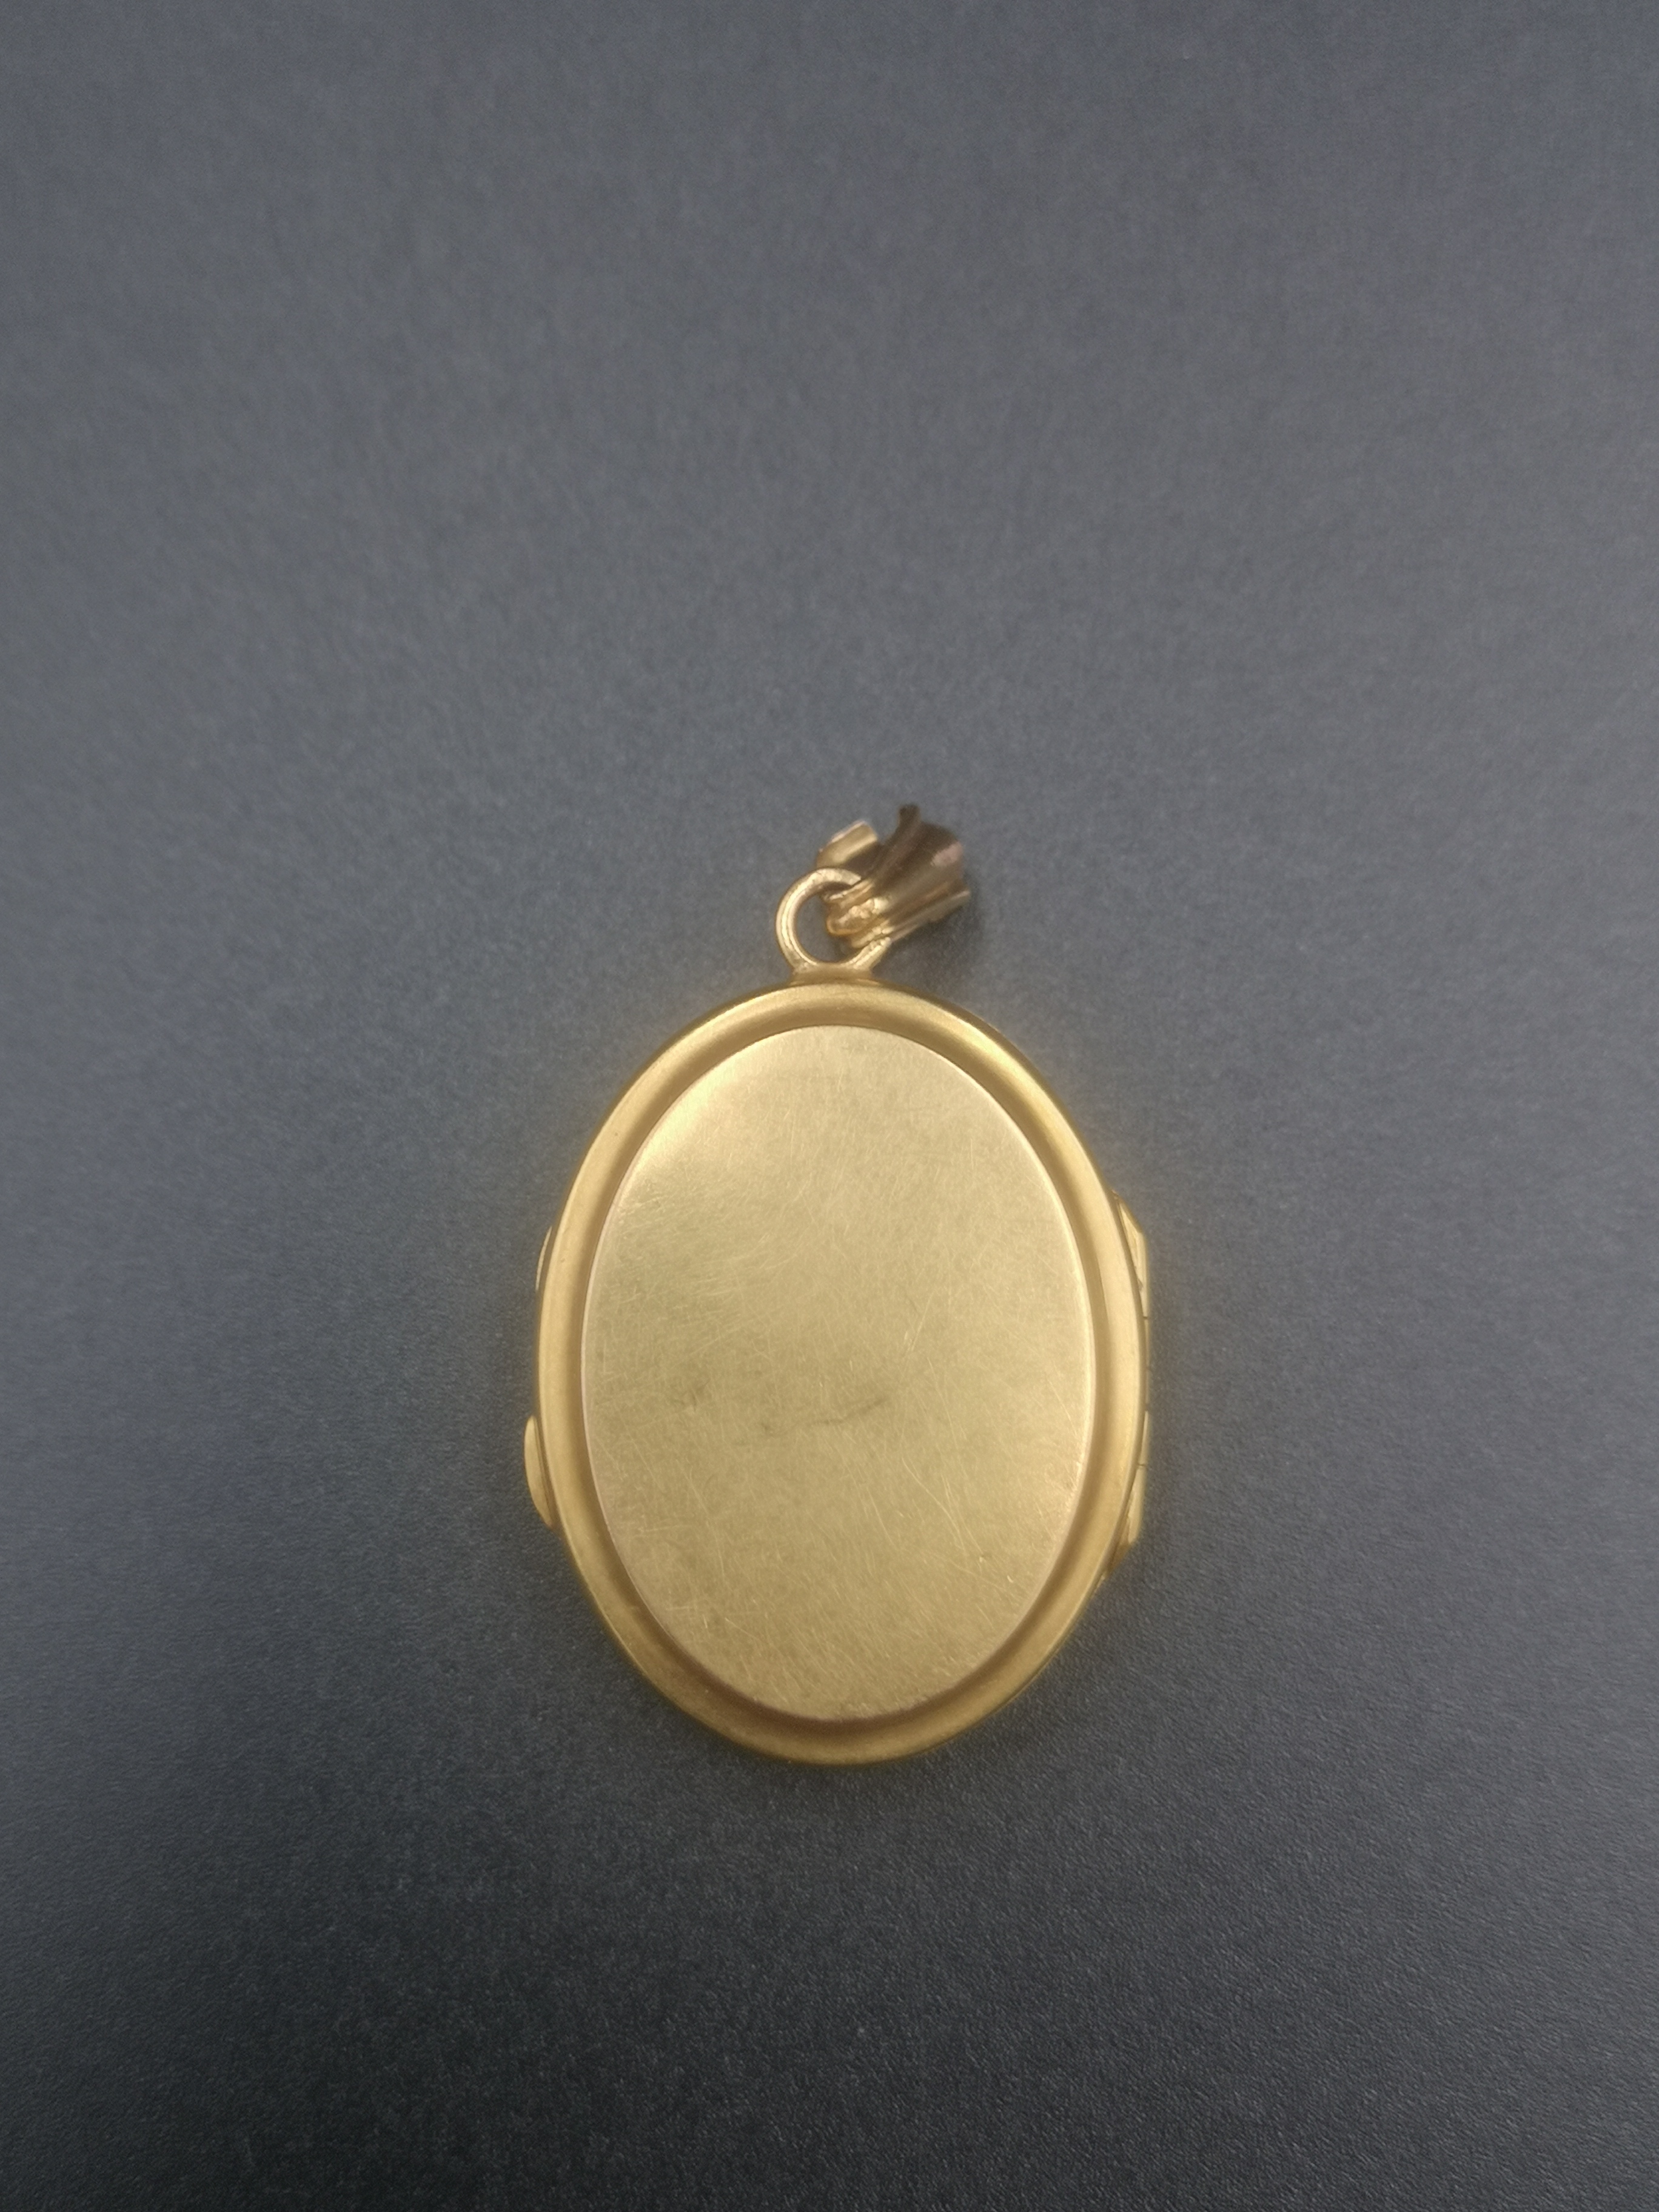 Victorian gold locket - Image 3 of 5